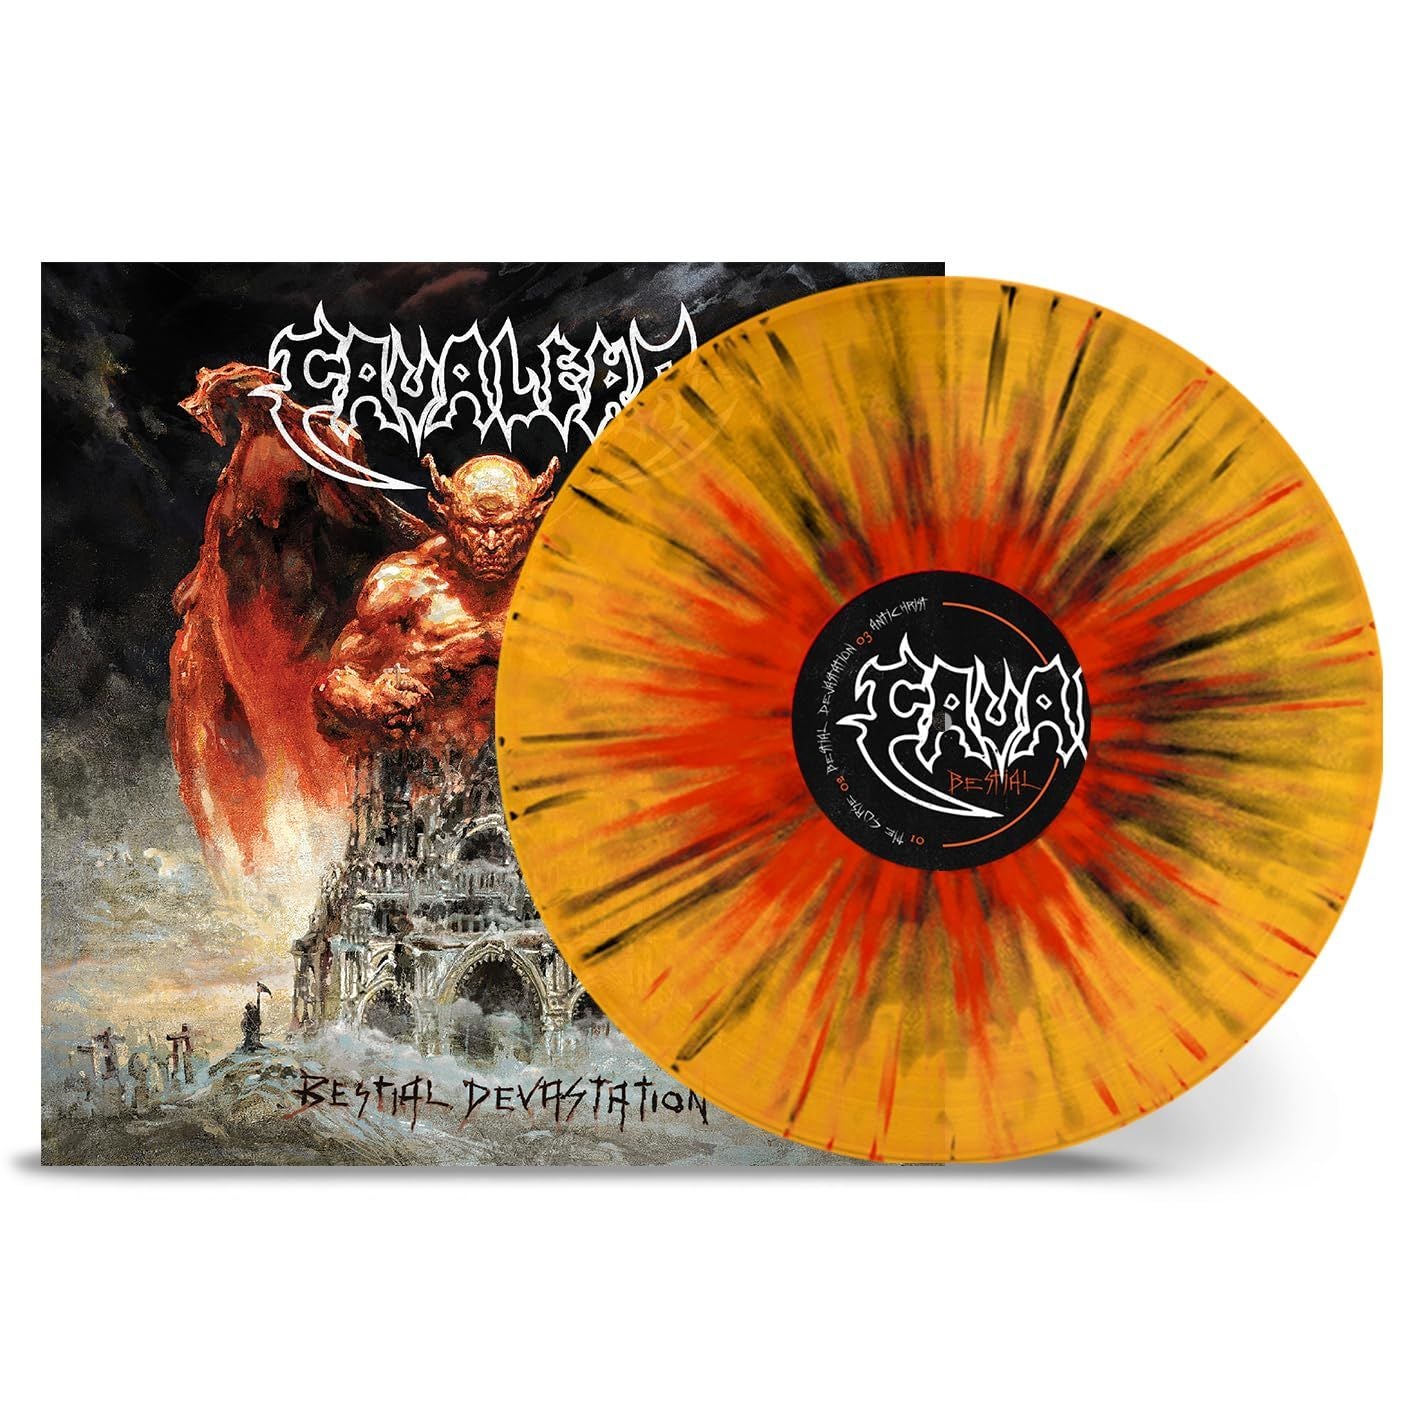 Cavalera - Bestial Devastation (Ltd. Ed. Transparent Orange with Red & Black Splatter vinyl - 1200 copies) - Vinyl - New